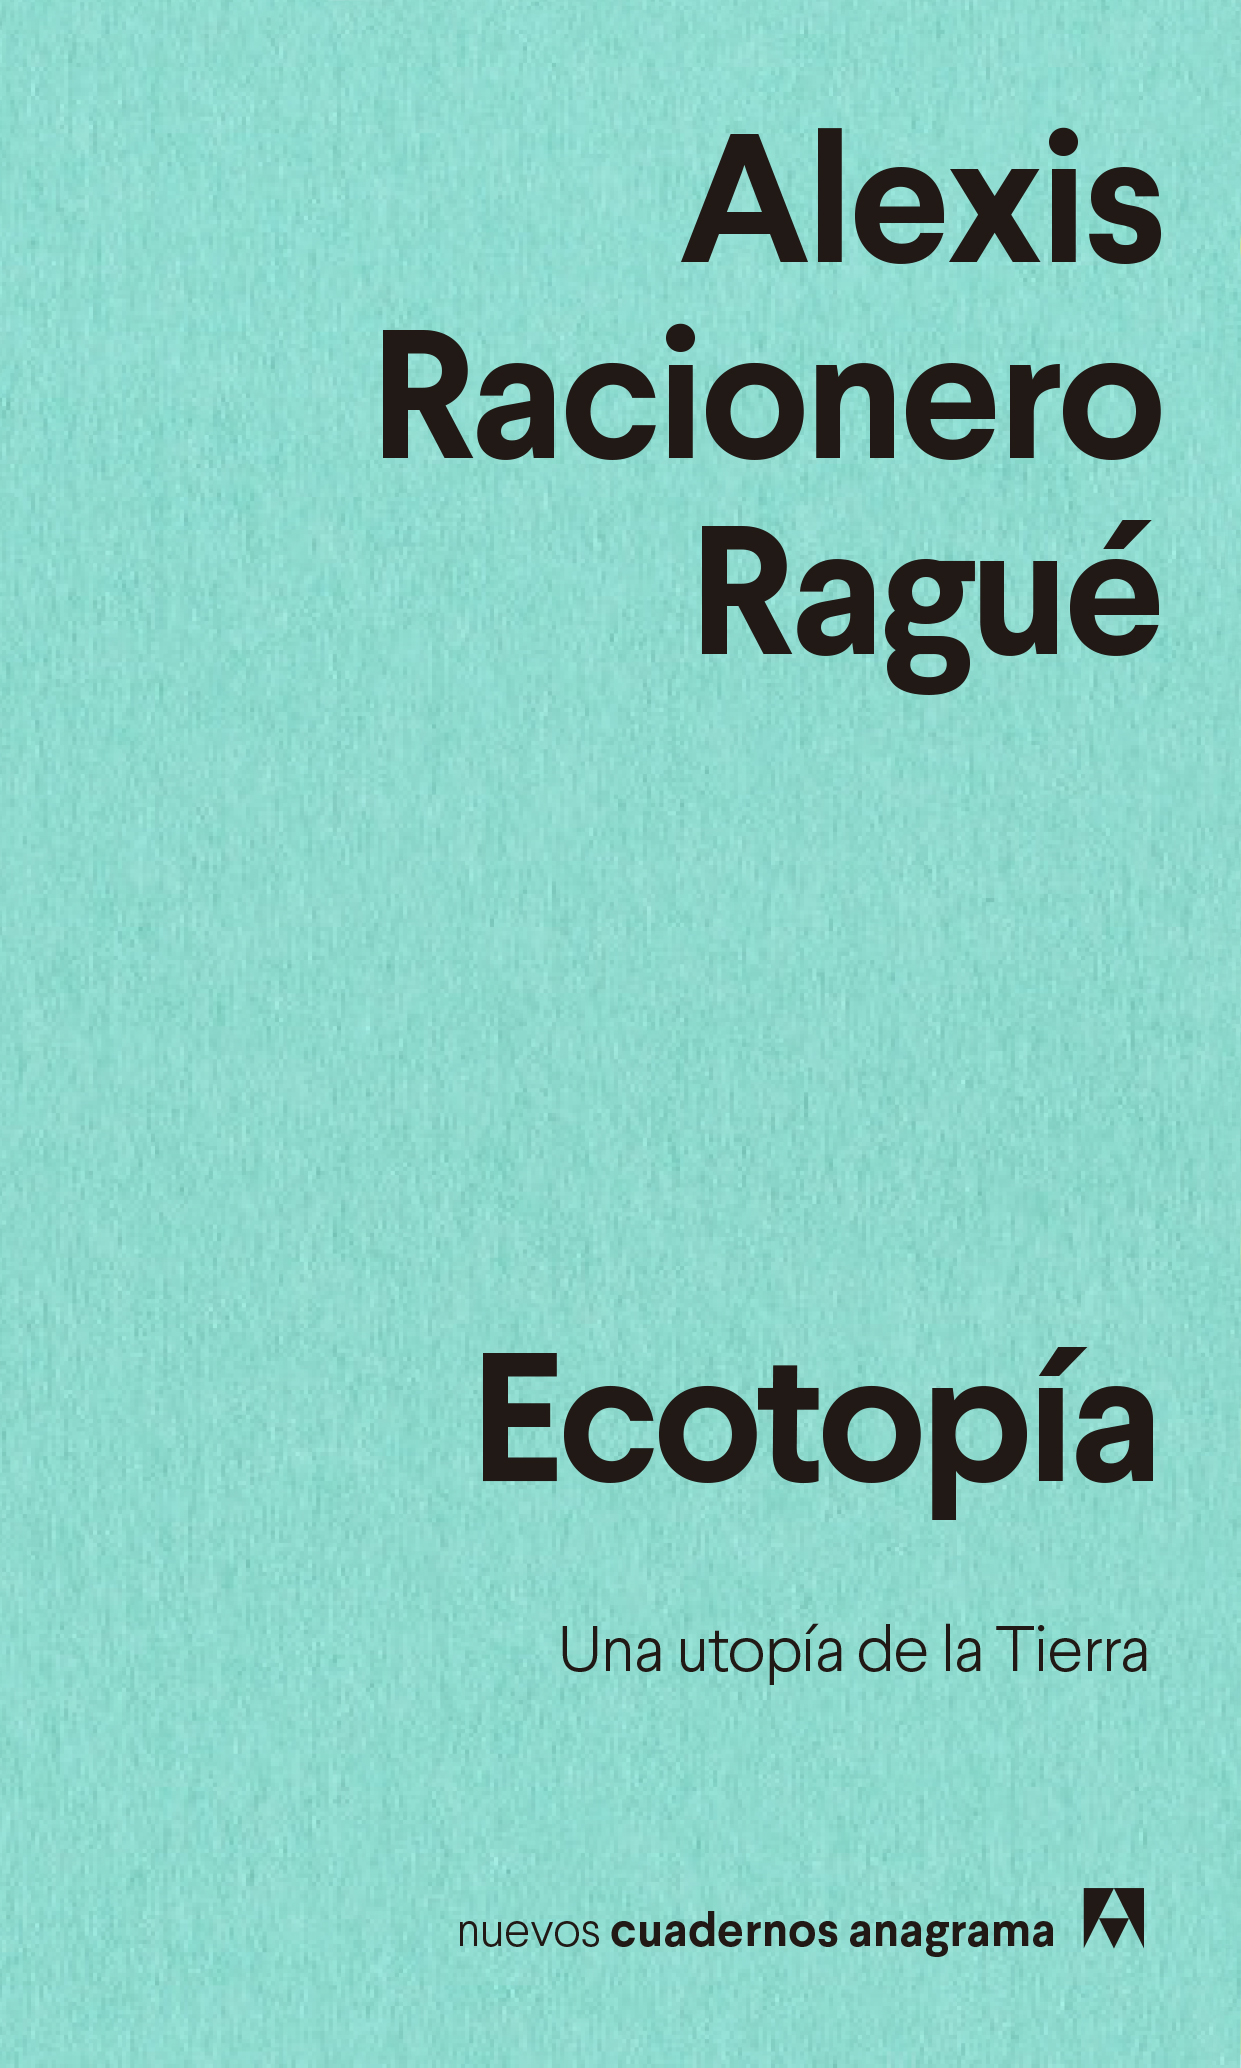 Caramelo Memoria Desventaja Ecotopía - Racionero Ragué, Alexis - 978-84-339-1656-3 - Editorial Anagrama